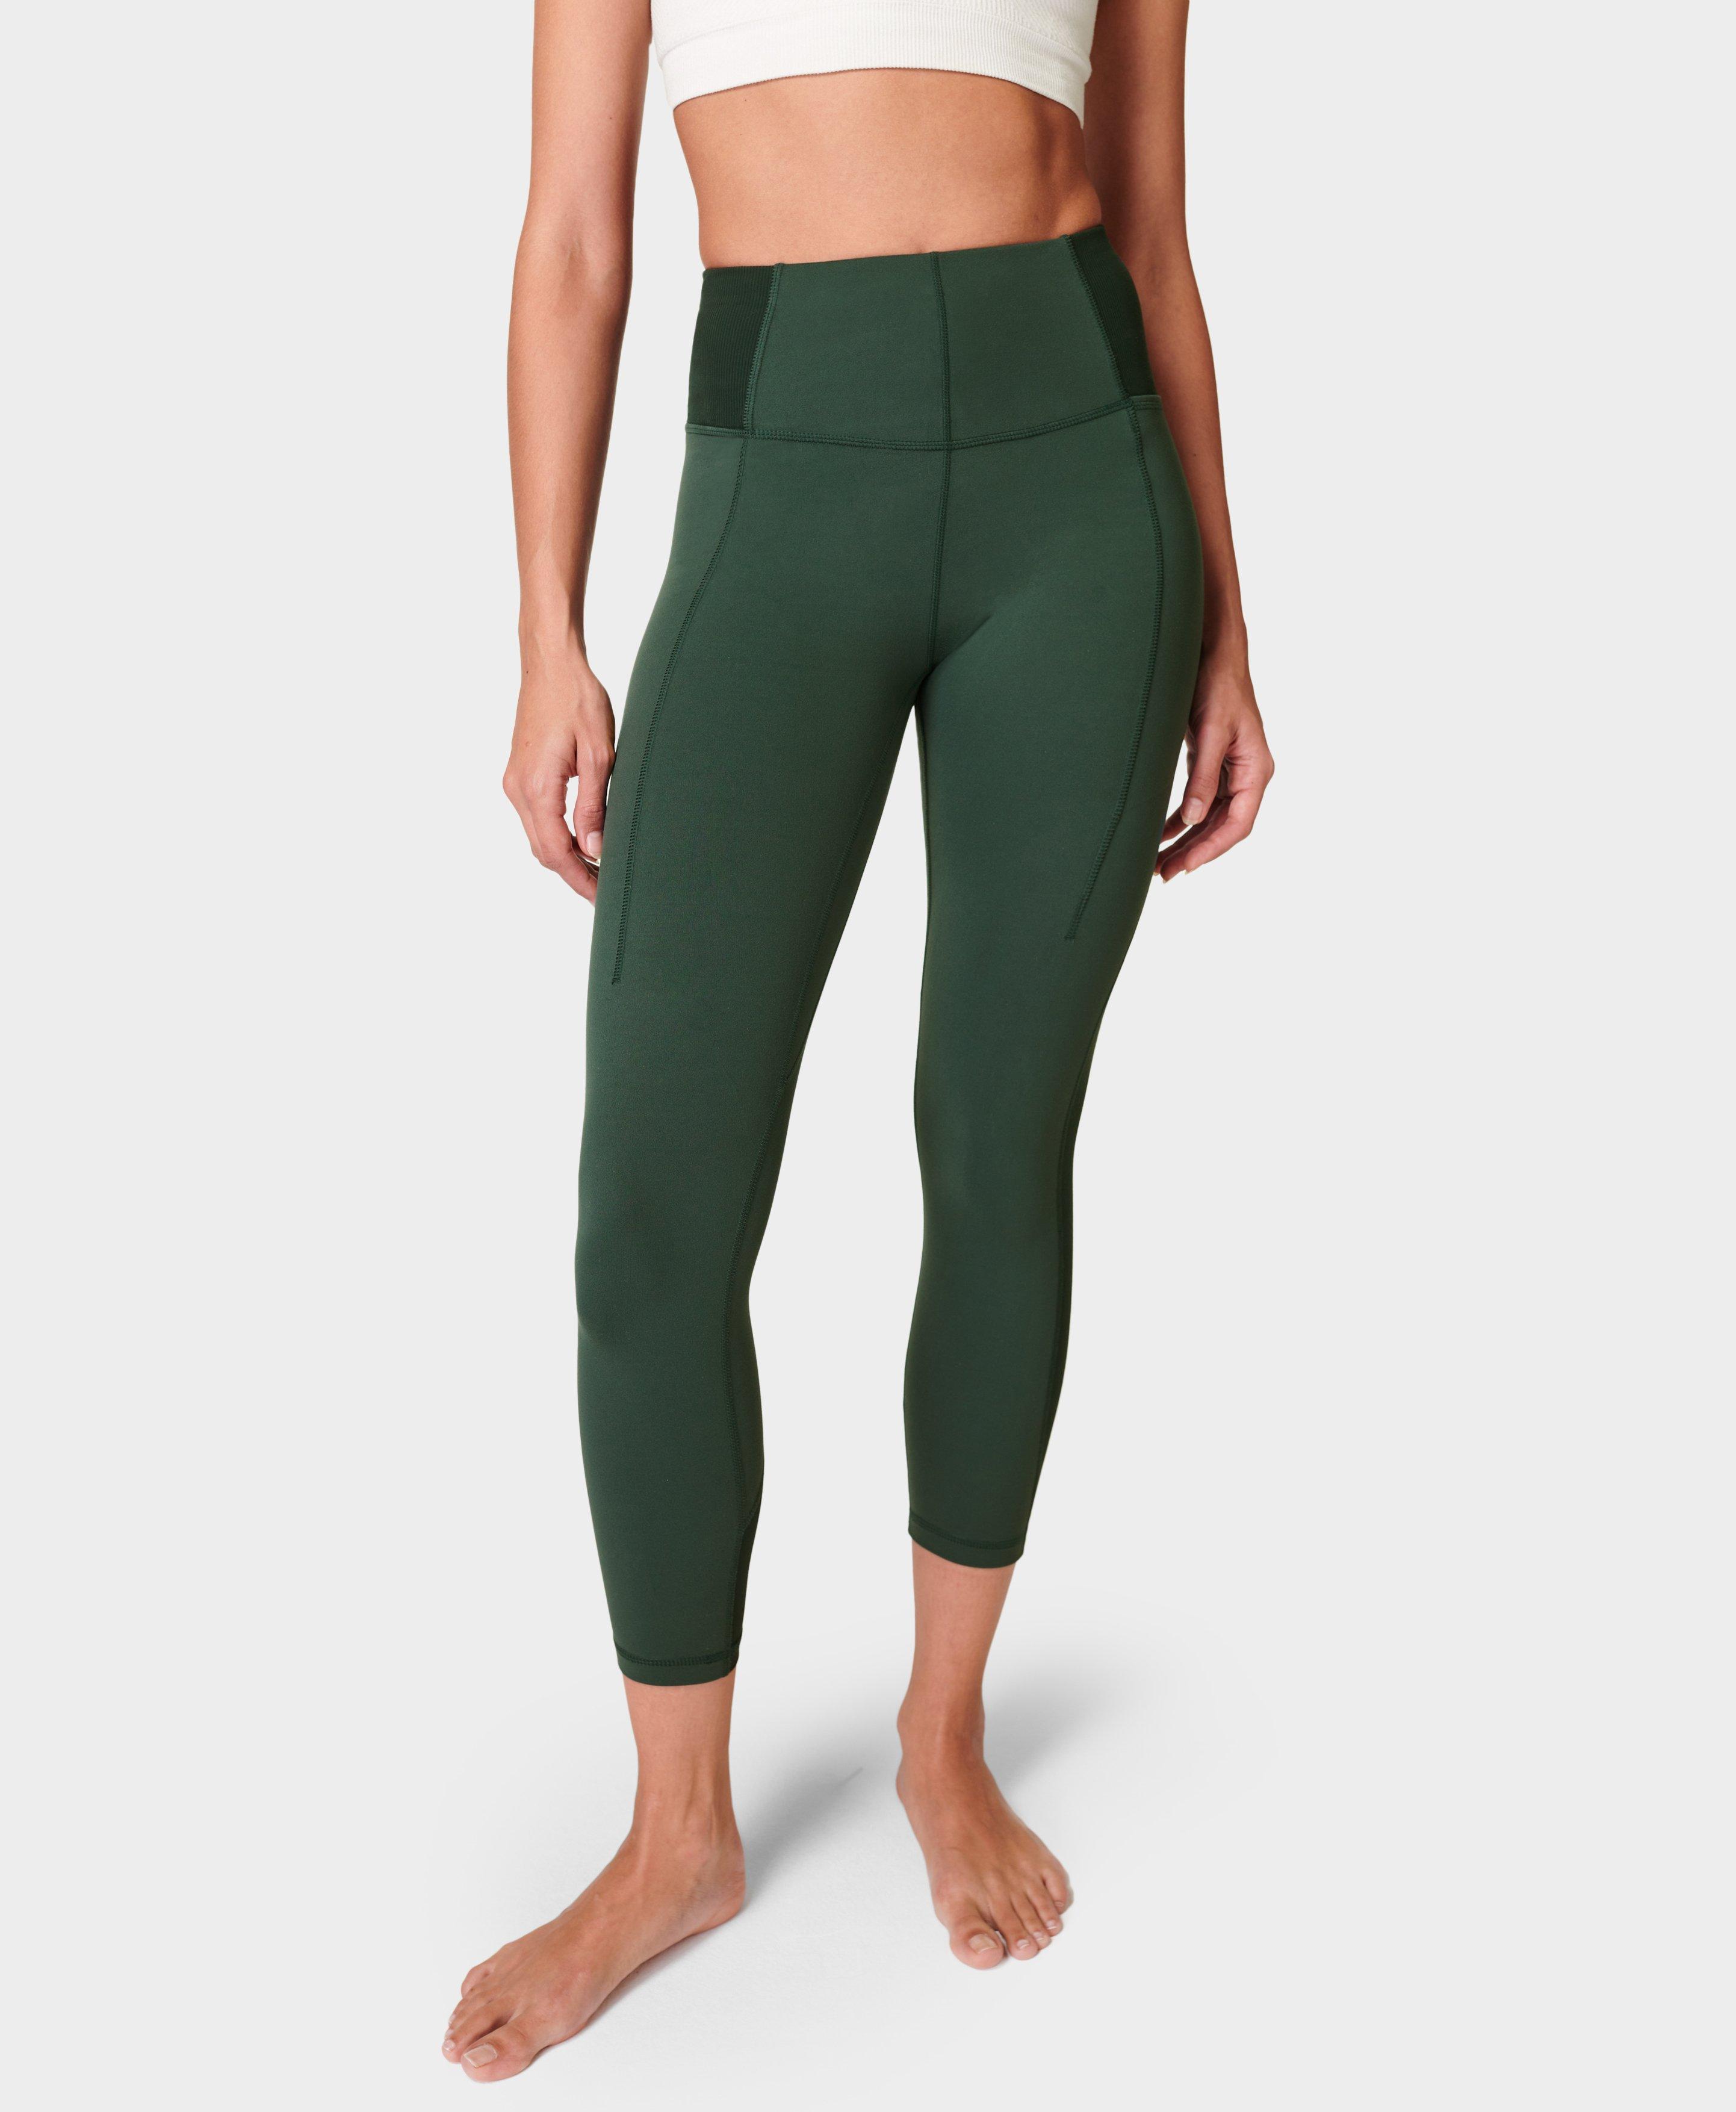 Nordstrom Zella High Waist 7/8 Daily Pocket Leggings Size XS Yoga Running  Green